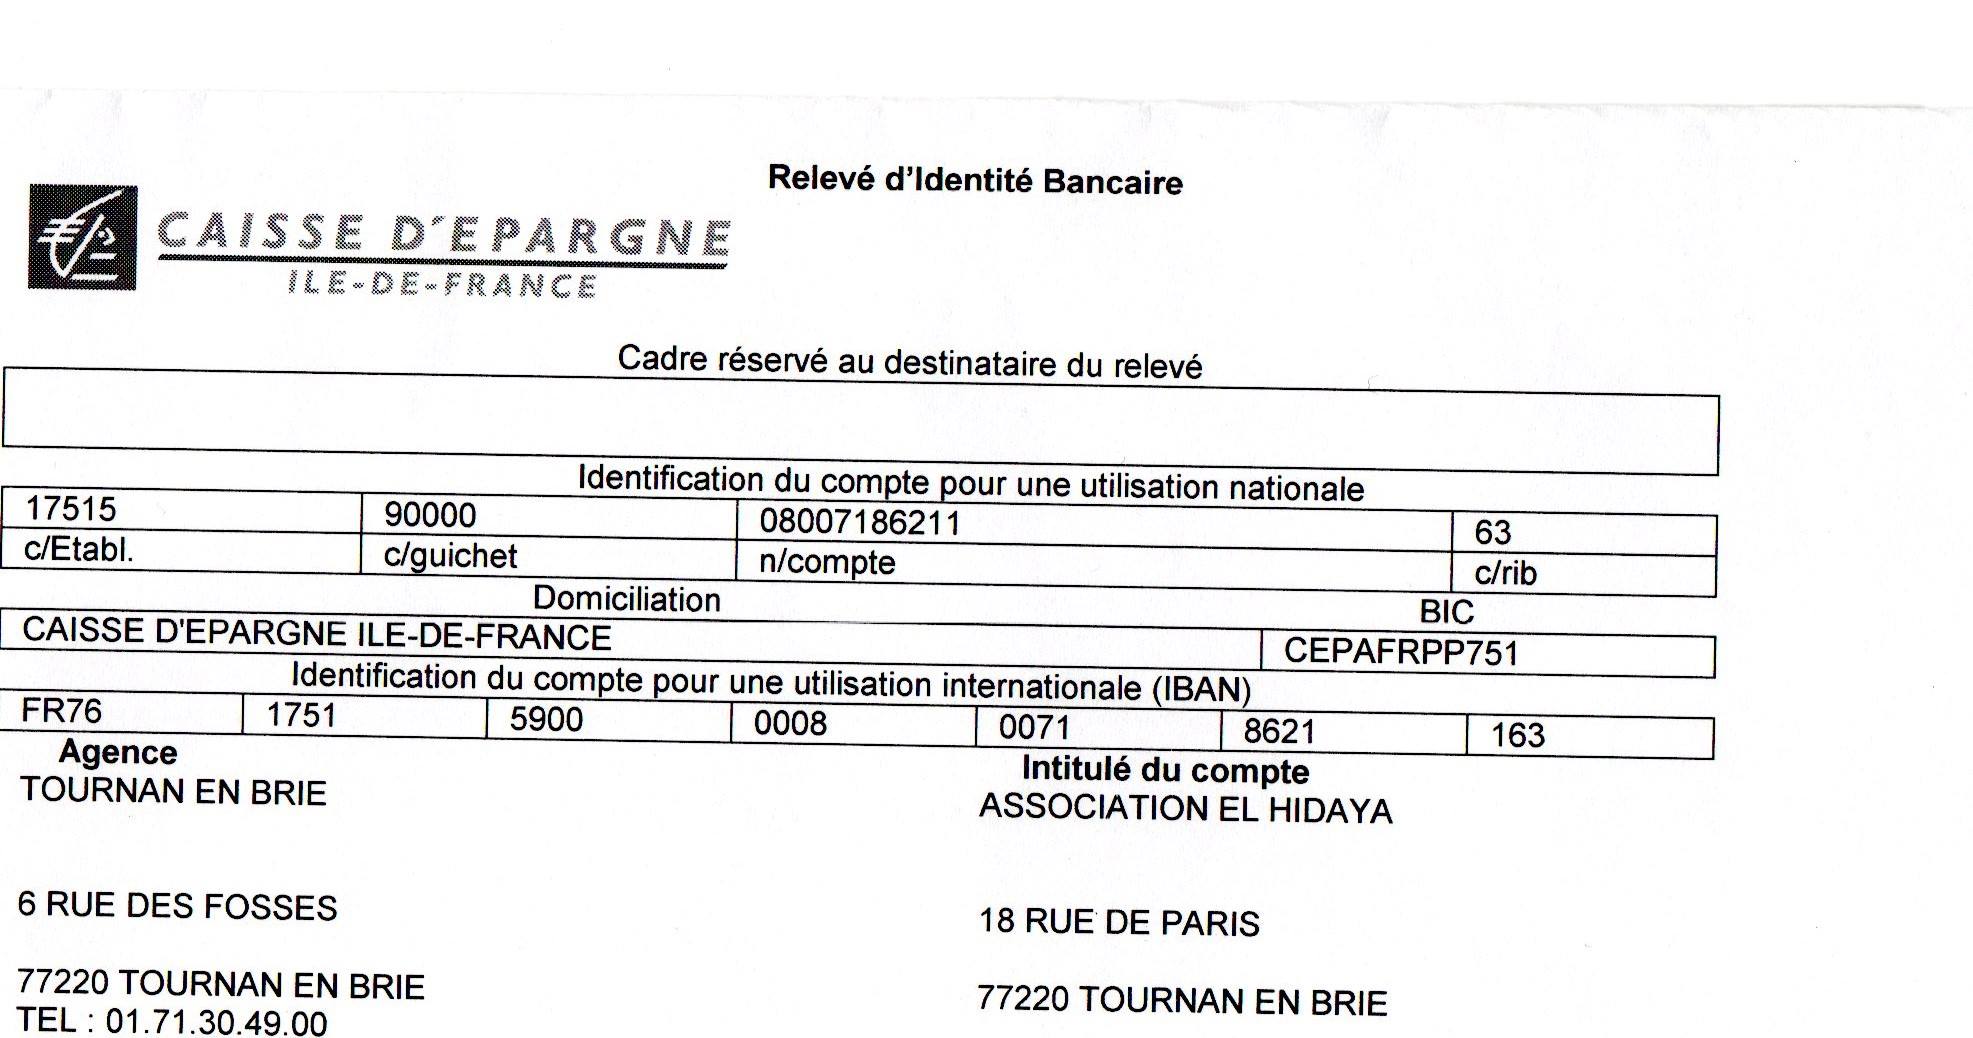 Coordonnées bancaires de l'association El Hidaya de Tournan-en-Brie